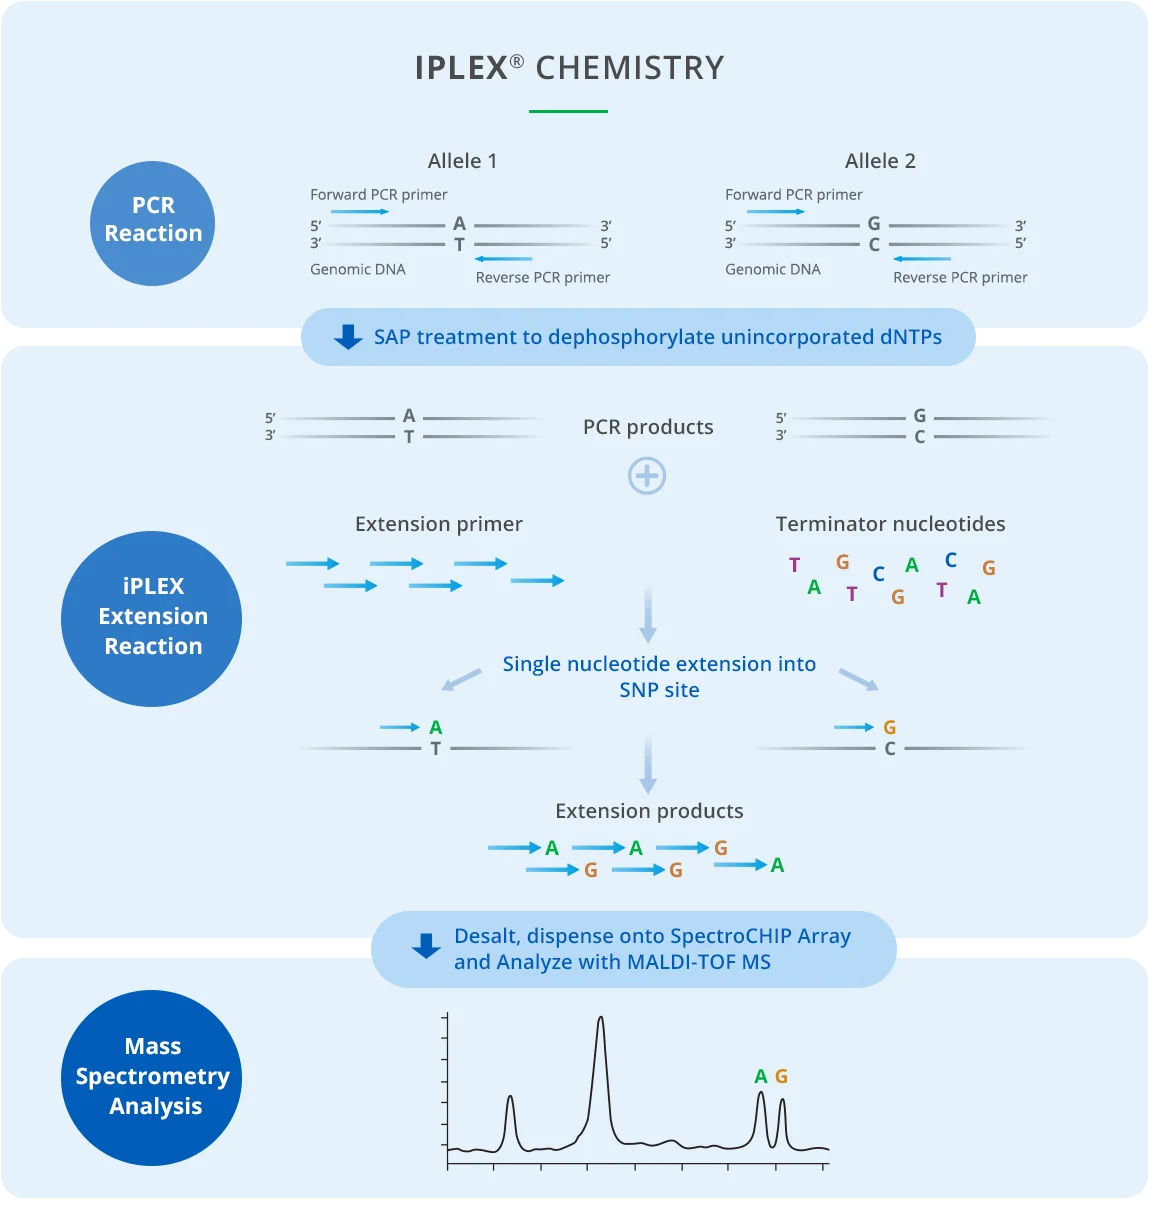 iPLEX Chemistry